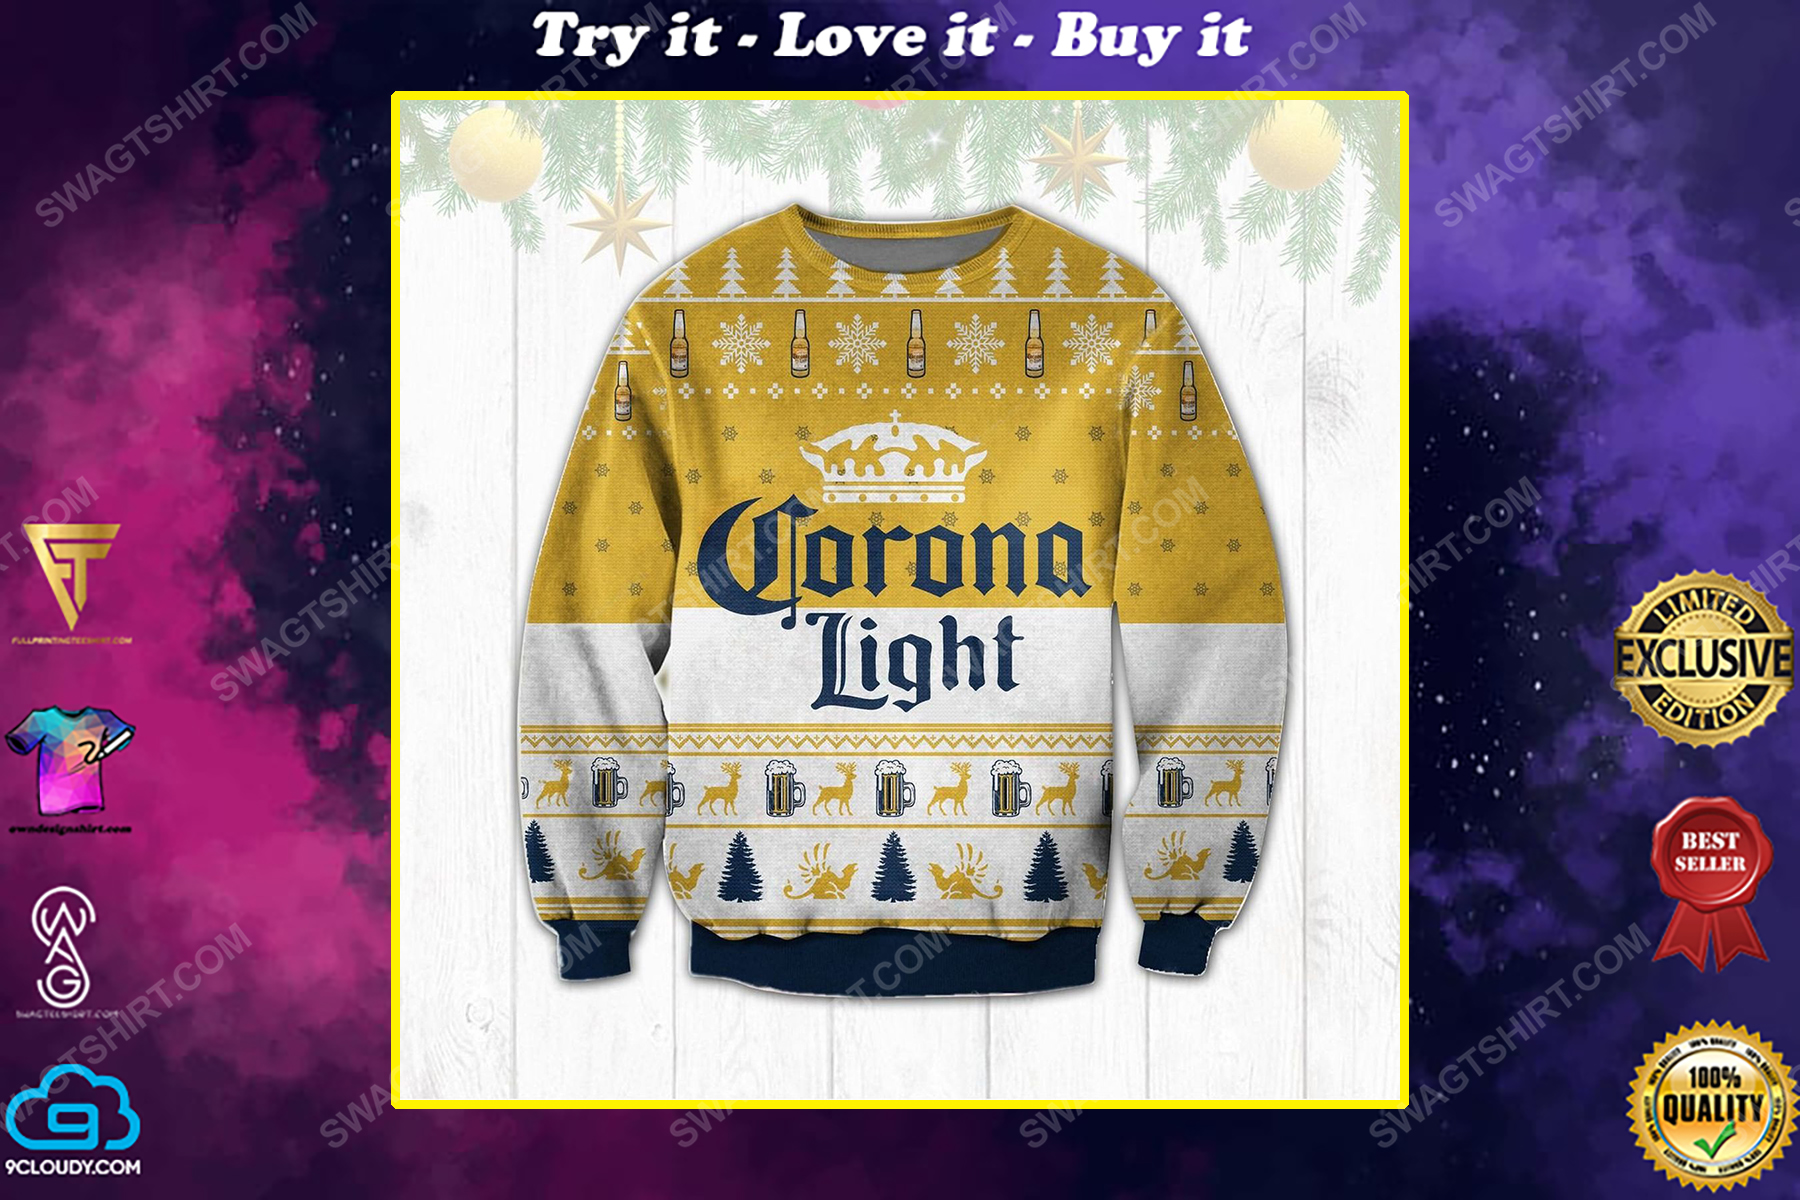 The corona light beer ugly christmas sweater